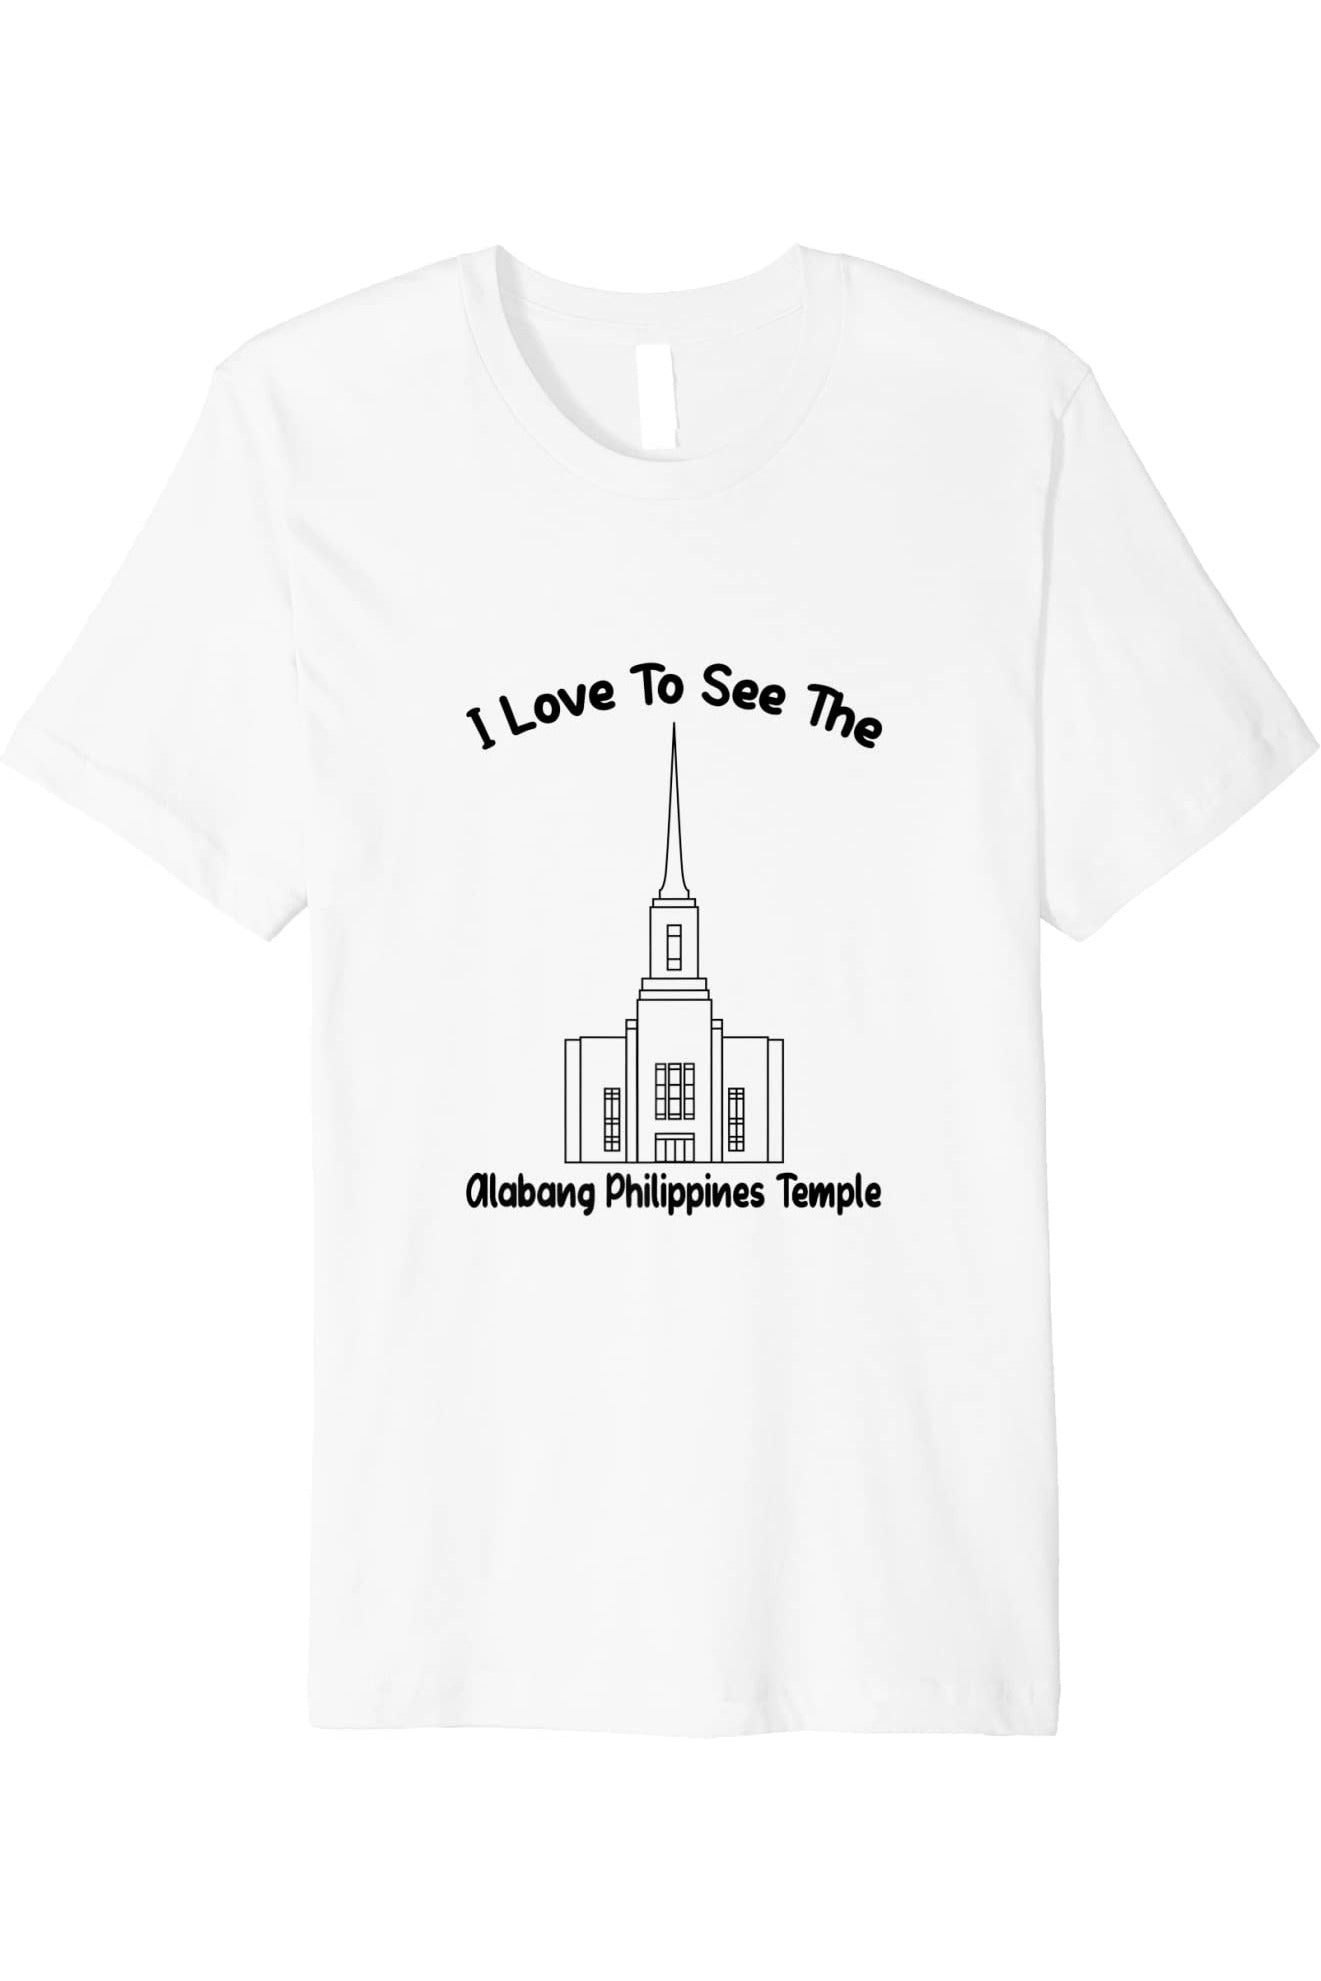 Alabang Philippines Temple T-Shirt - Premium - Primary Style (English) US